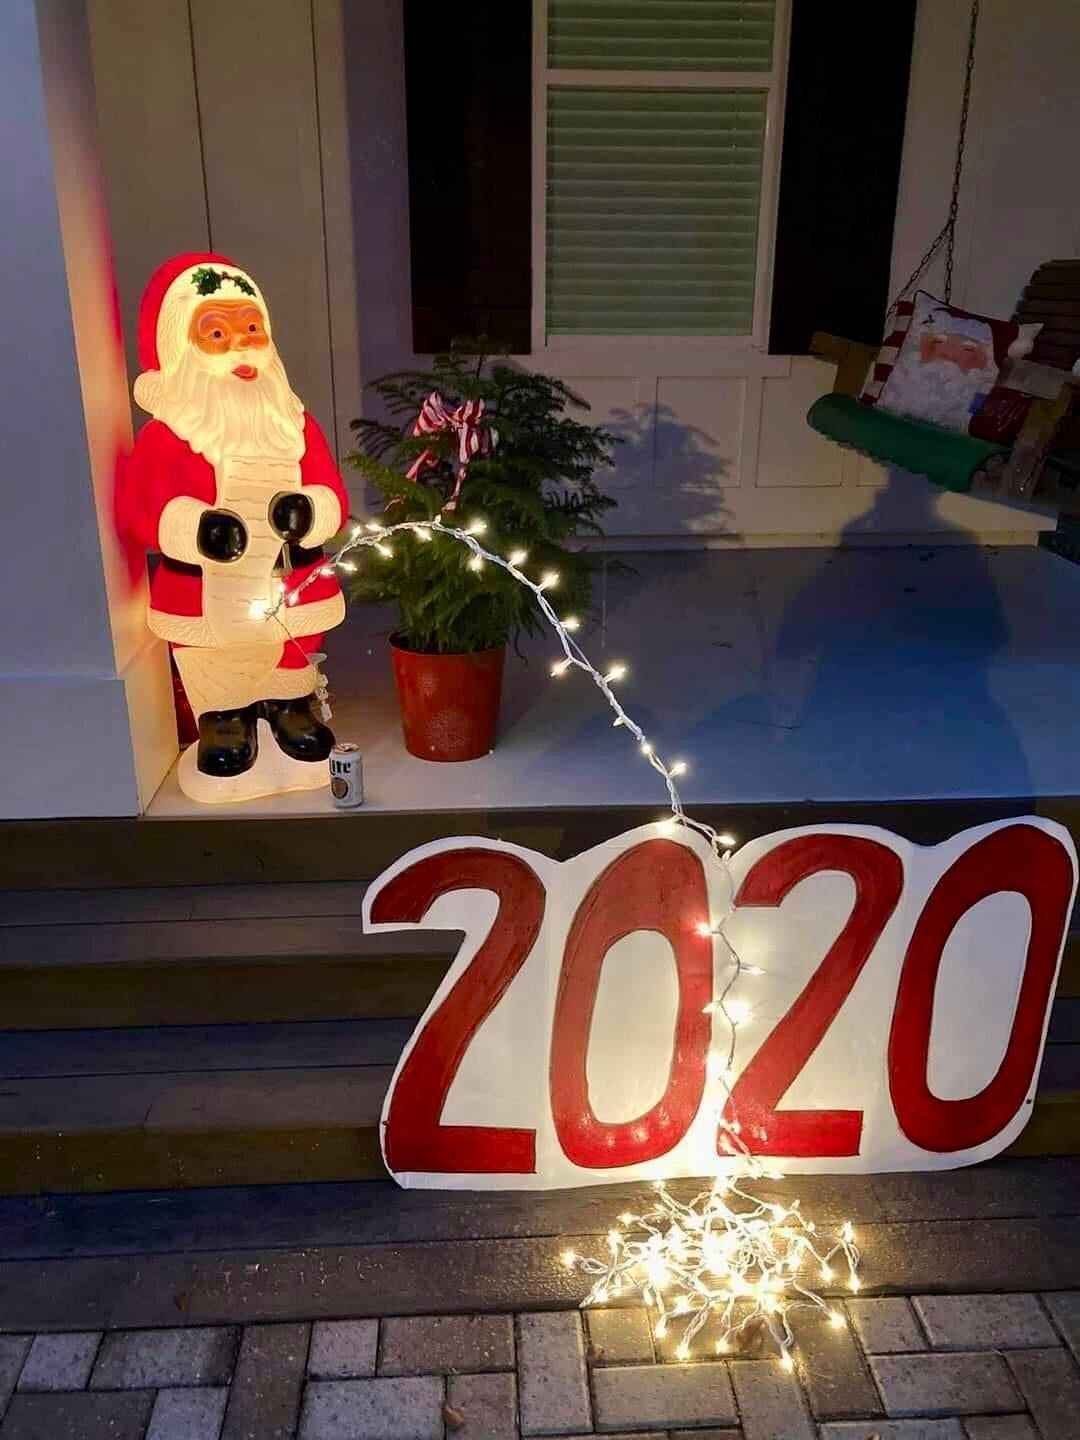 Even Santa knows.